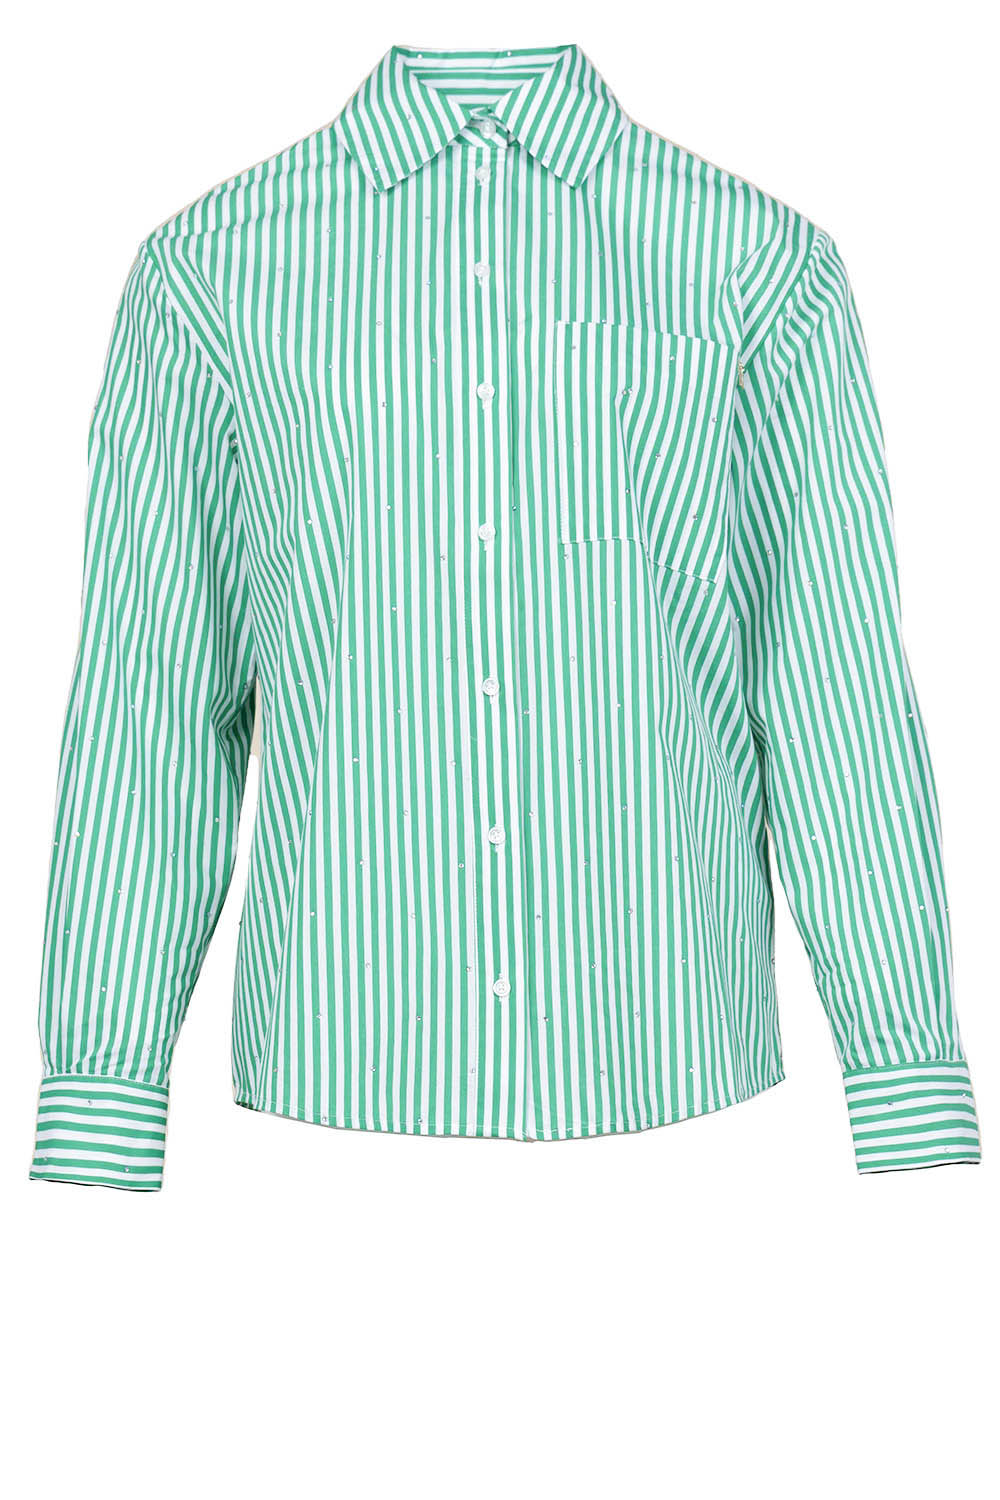 Kocca Gestreepte blouse met strass steentjes Stefy groen